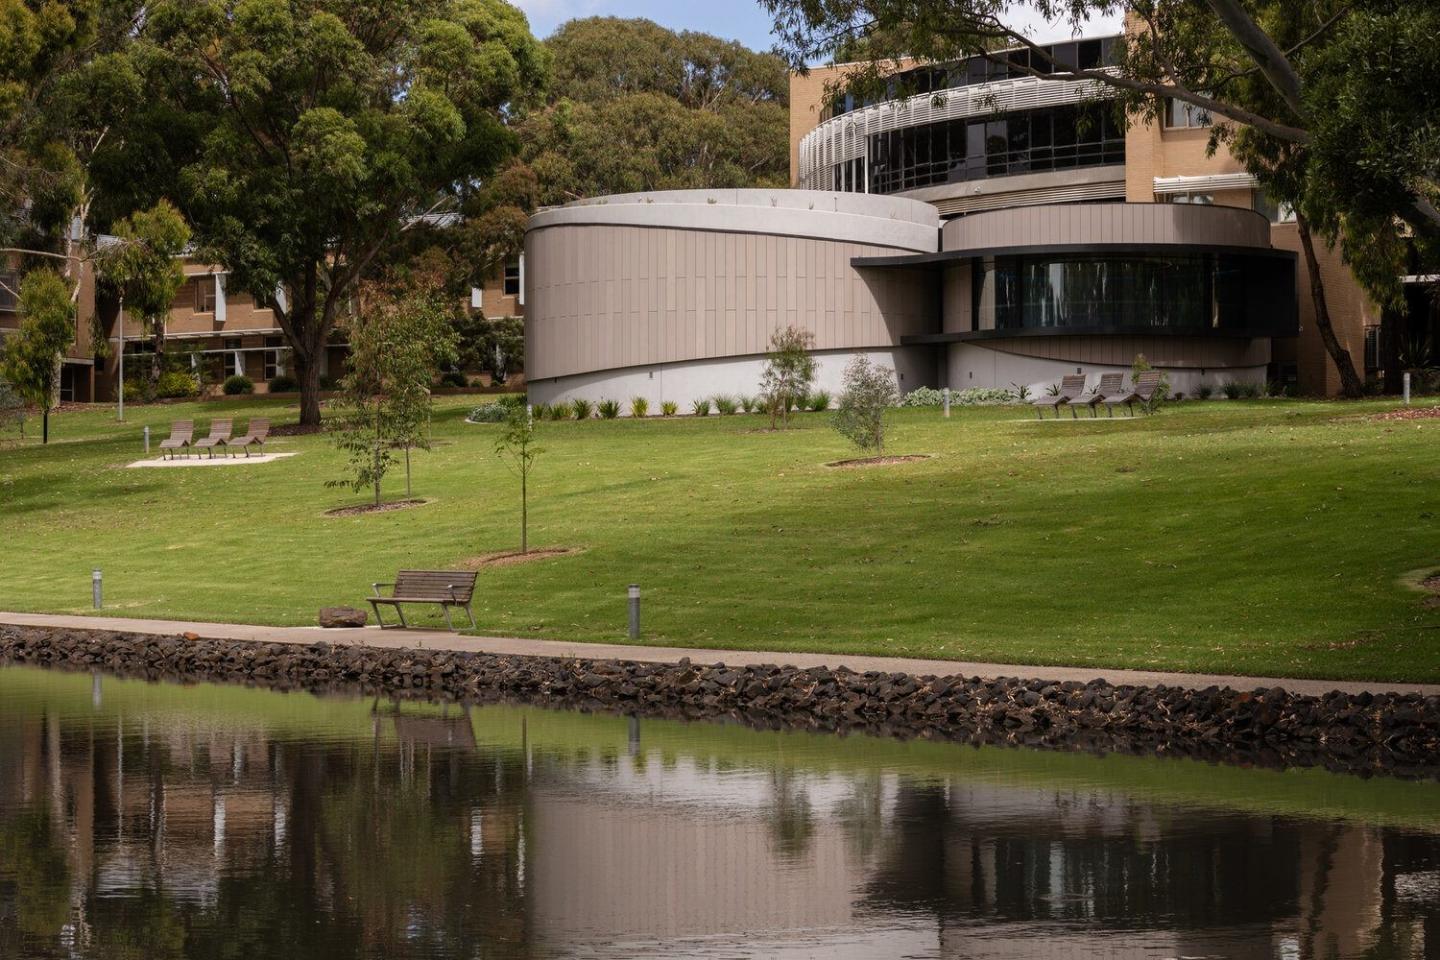 The Nyaal Precinct building on Deakin University’s Waurn Ponds campus in Geelong, Australia.